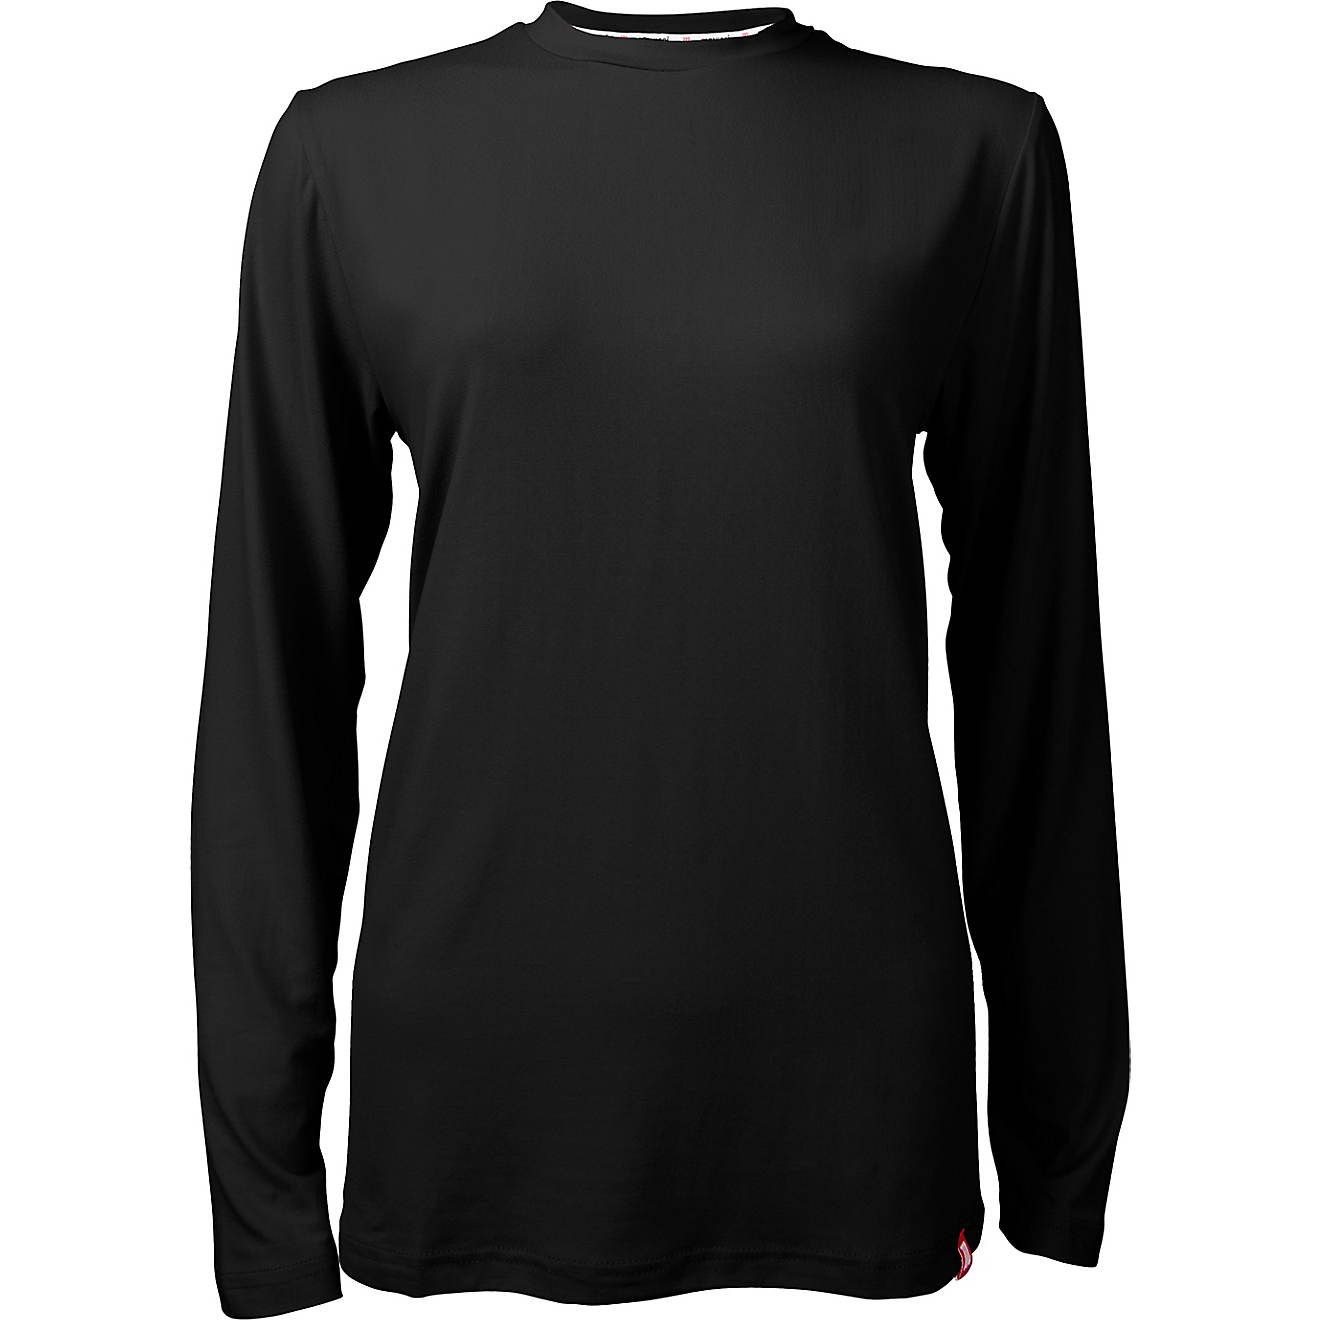 Marucci Women's Long Sleeve Performance Softball T-shirt                                                                         - view number 1